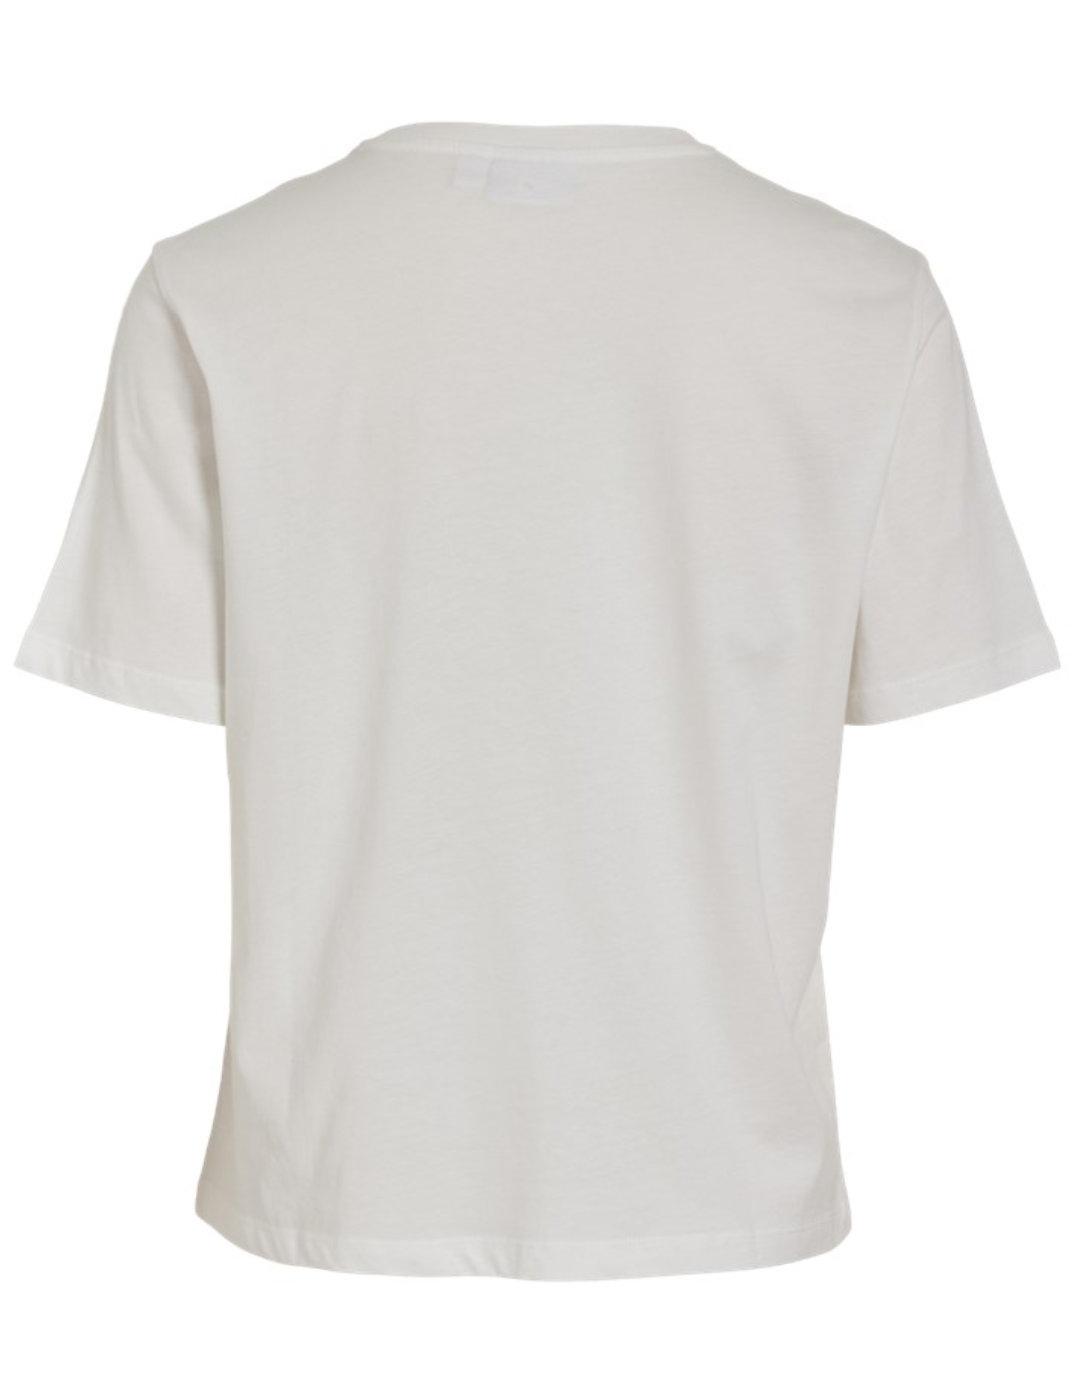 Camiseta Vila Bil blanca Boungiorno manga corta para mujer